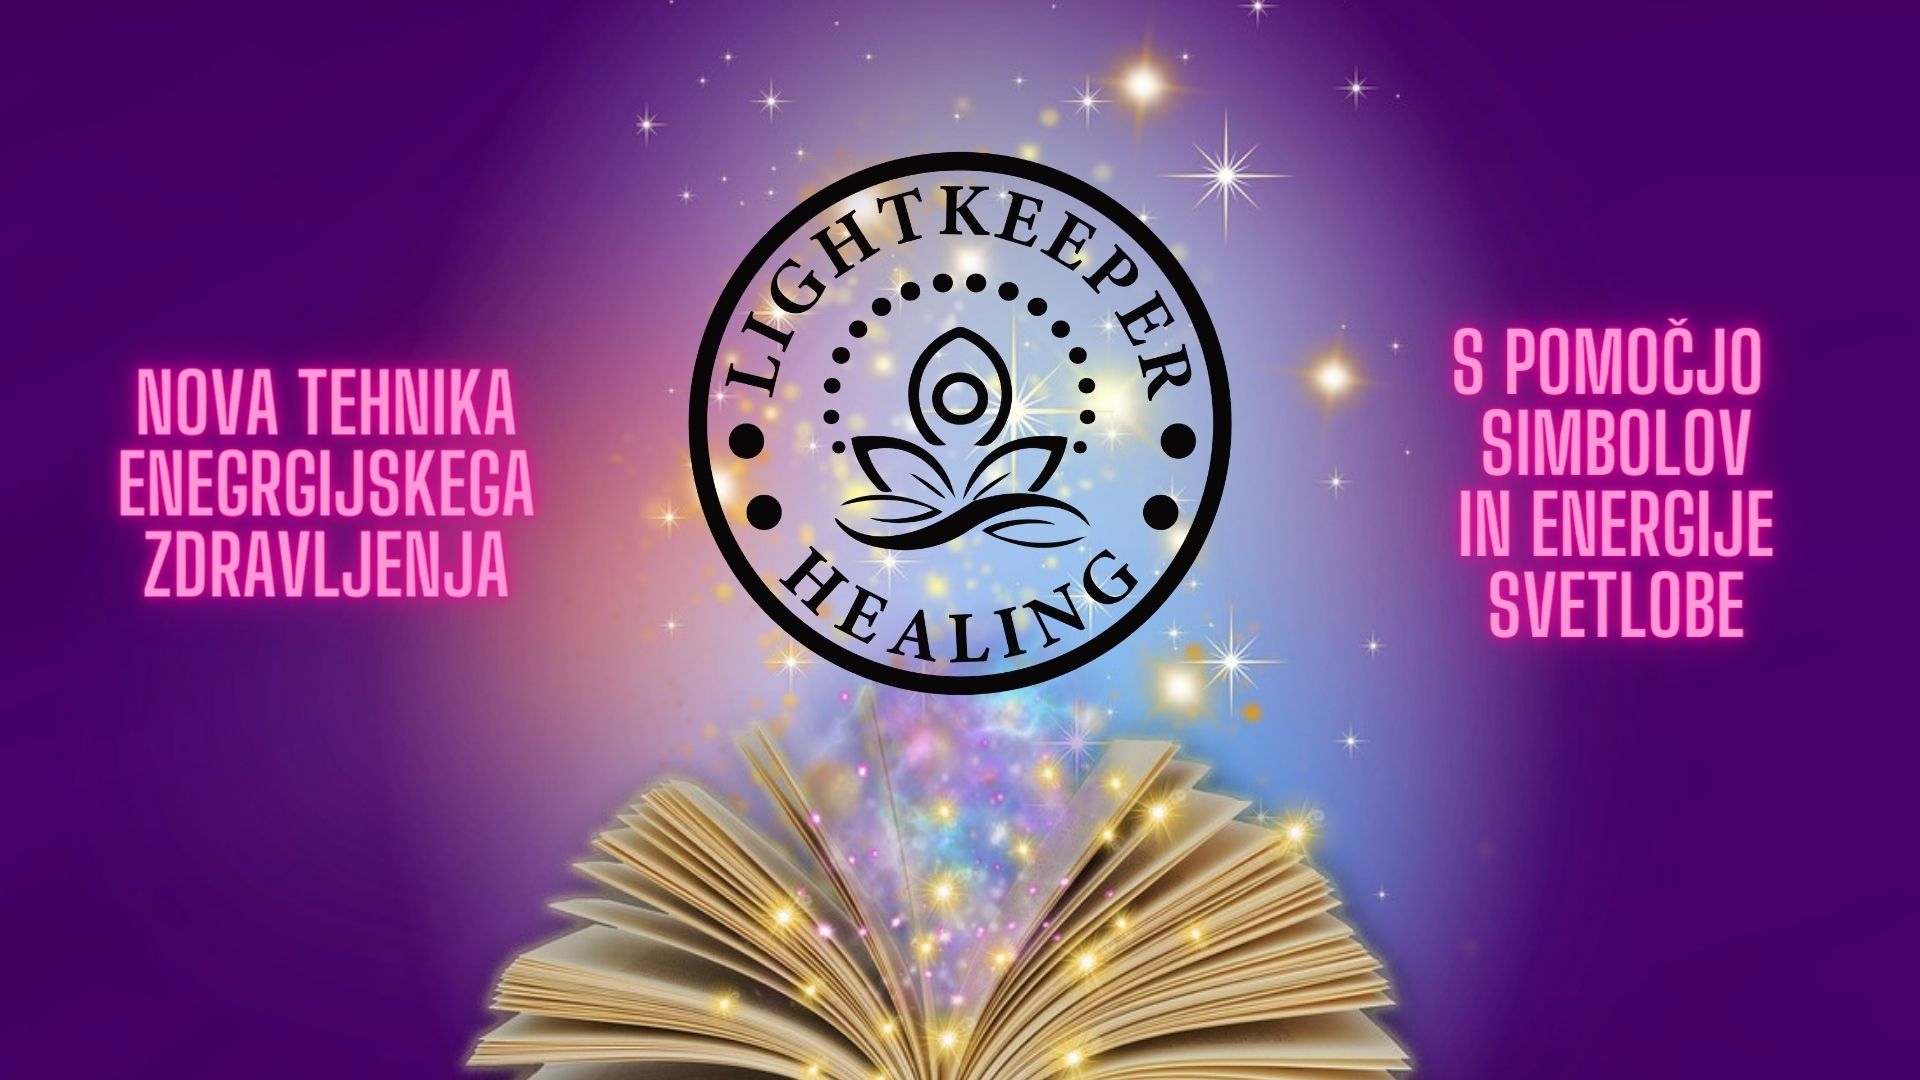 Tečaj – Lightkeeper healing 1. stopnja 7